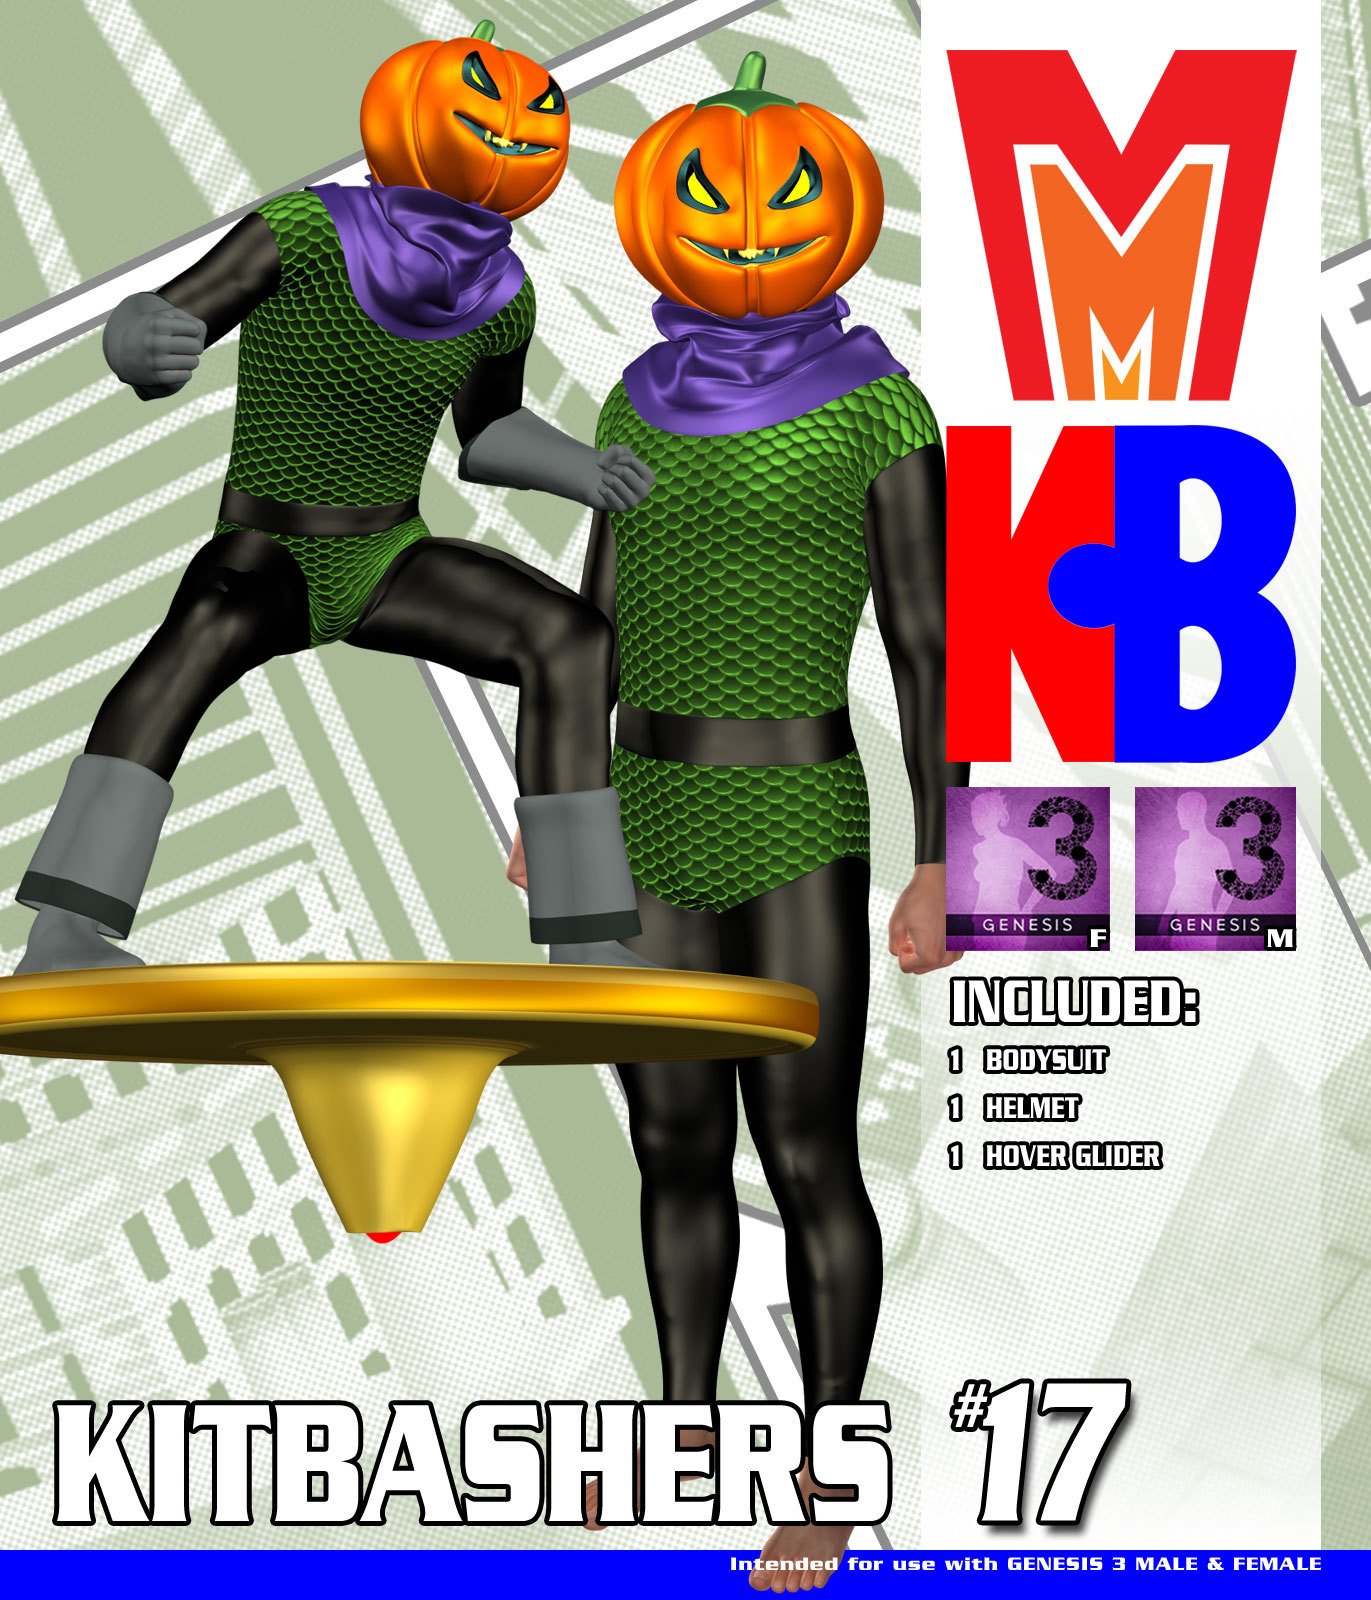 Kitbashers 017 MMG3M by: MightyMite, 3D Models by Daz 3D